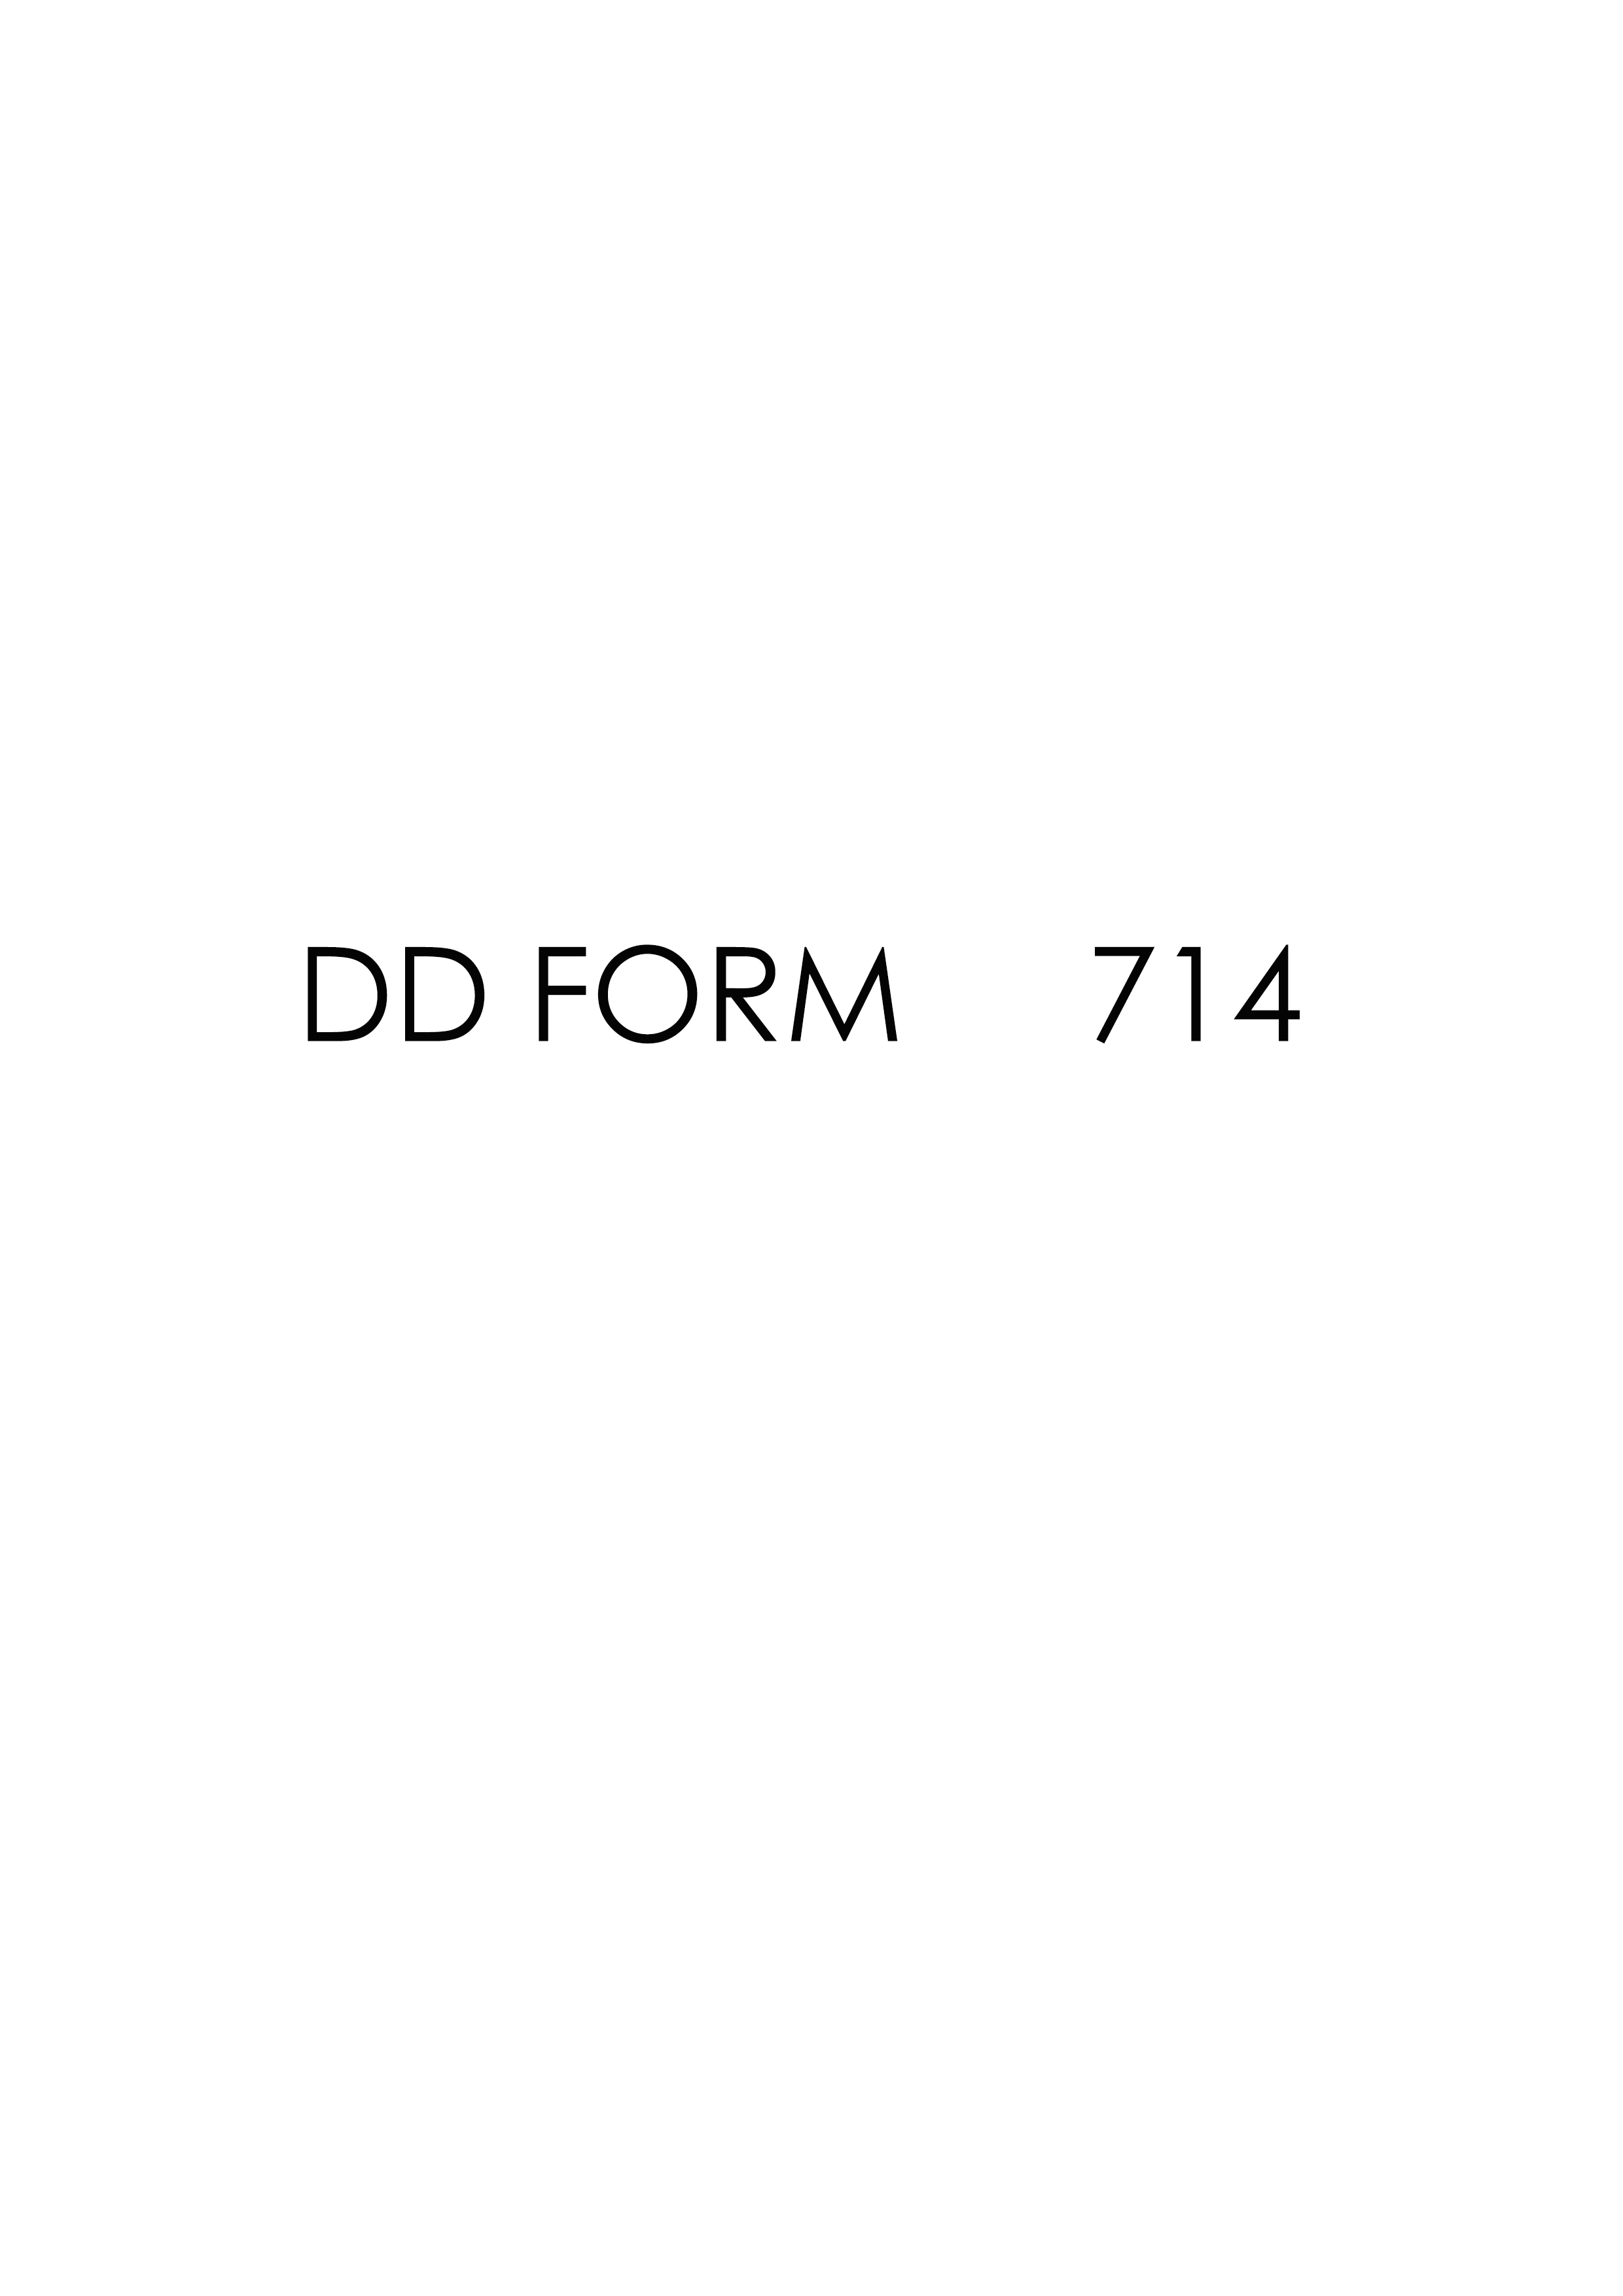 Download dd form 714